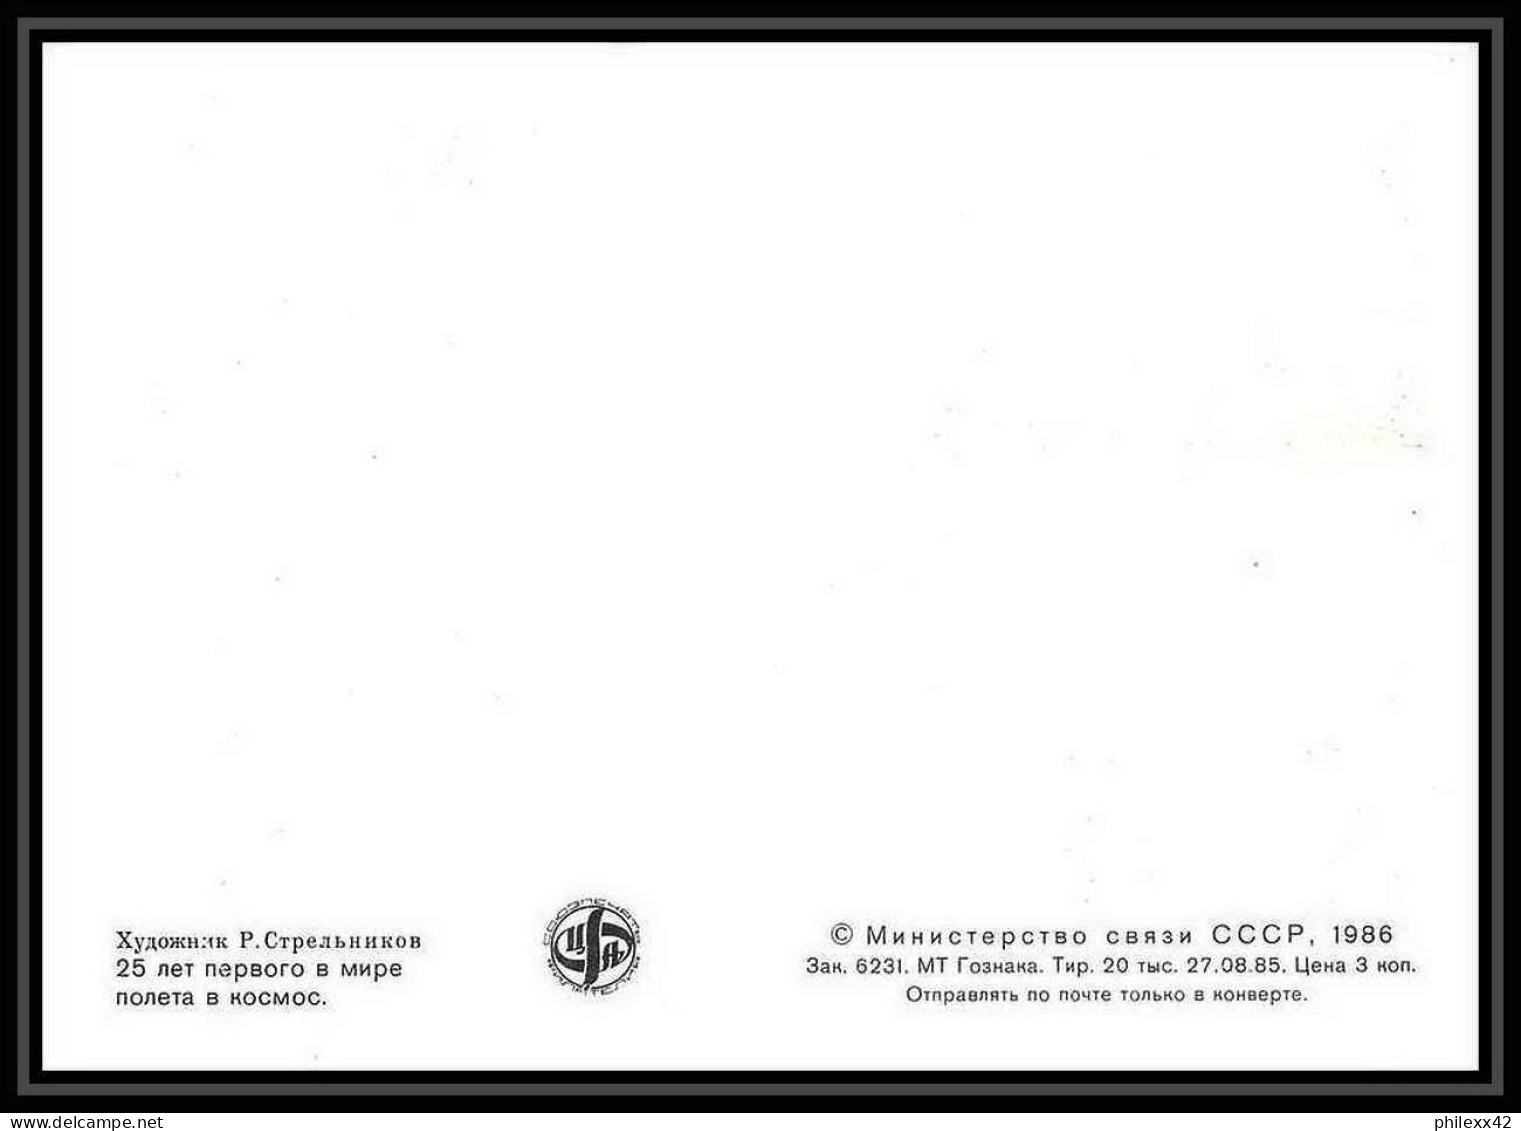 9274/ Espace (space Raumfahrt) Carte Maximum (card) 12/4/1986 Tsiolkovski (Russia Urss USSR) - Rusia & URSS